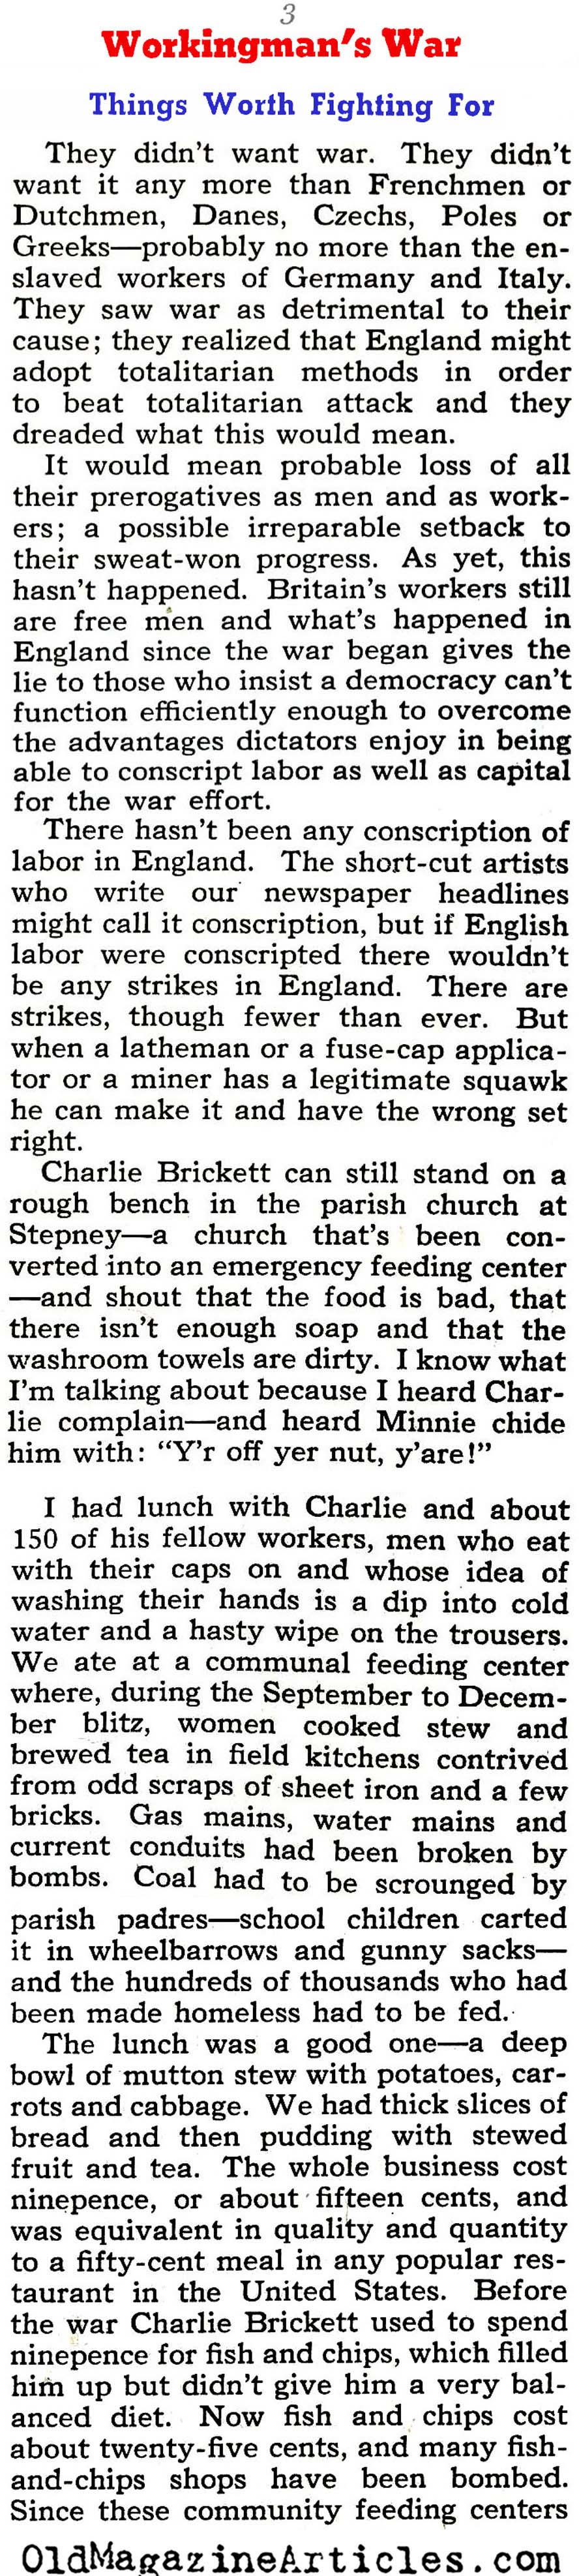 ''Workingman's War'' (Collier's Magazine, 1941)